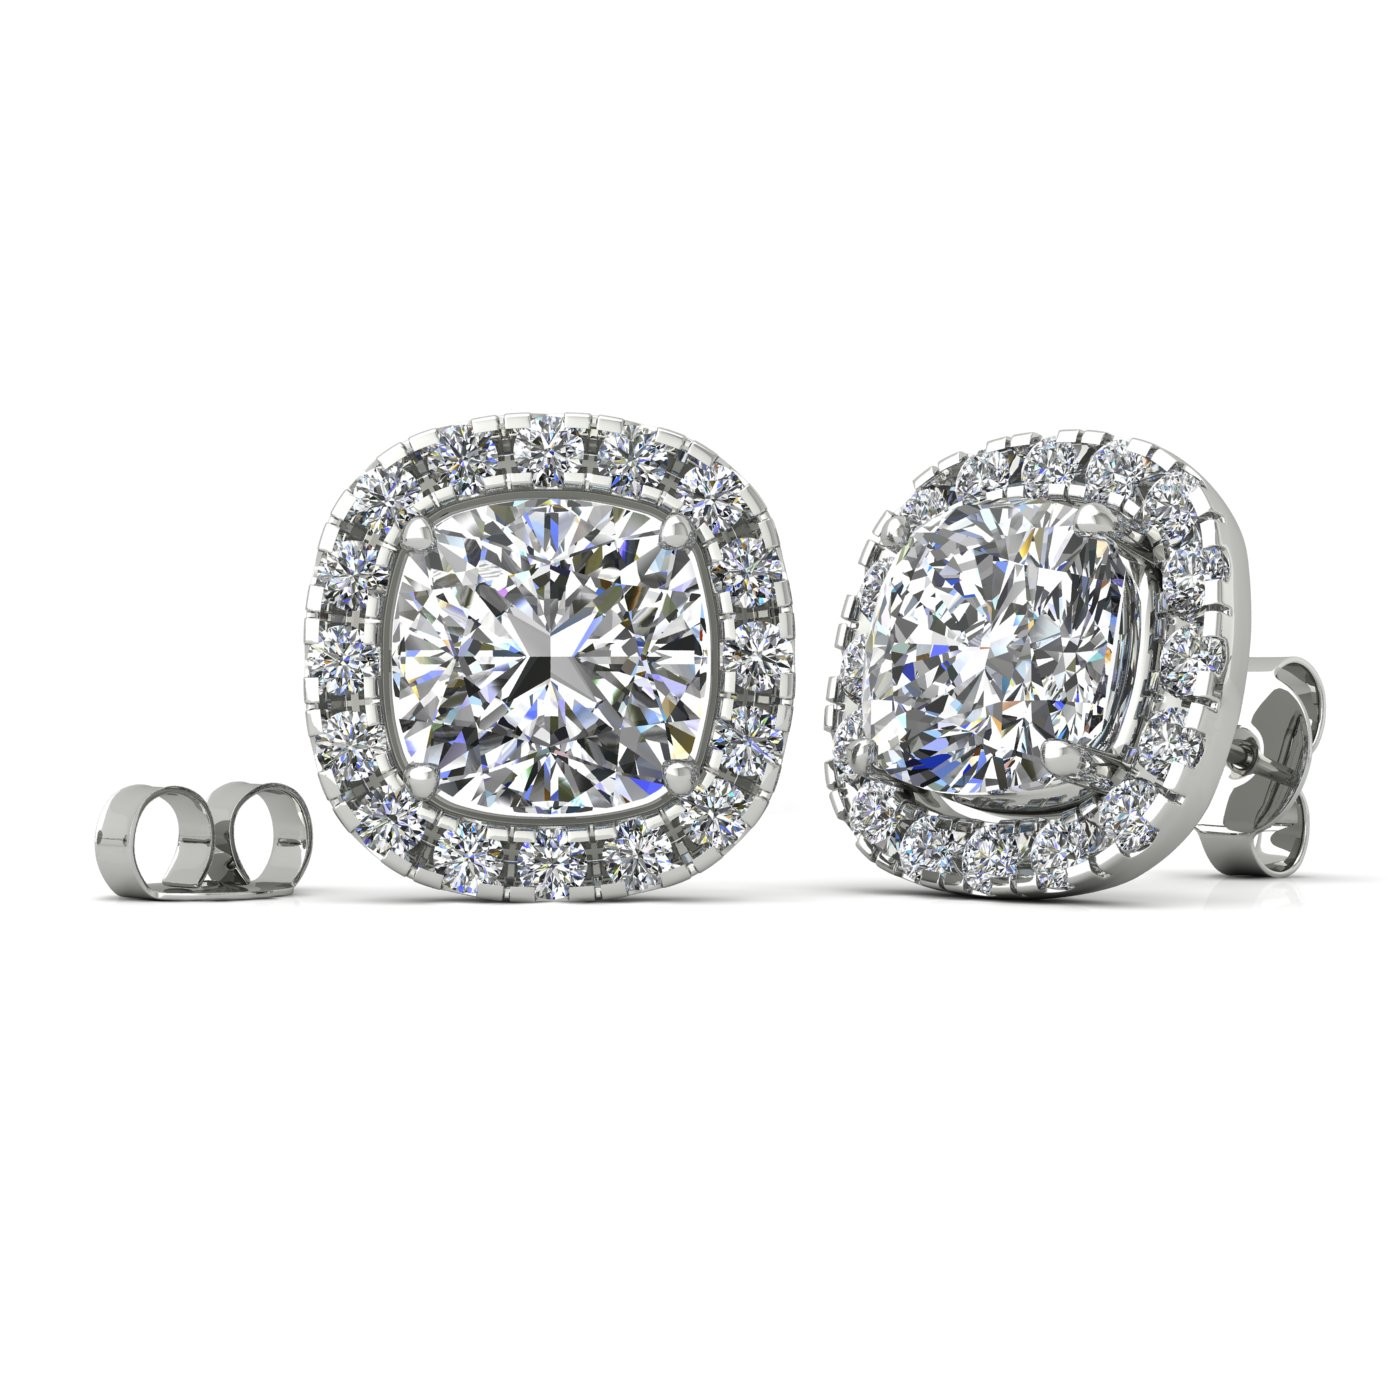 18k white gold  1,0 ct each (2,0 tcw) 4 prongs cushion shape diamond earrings with diamond pavÉ set halo Photos & images